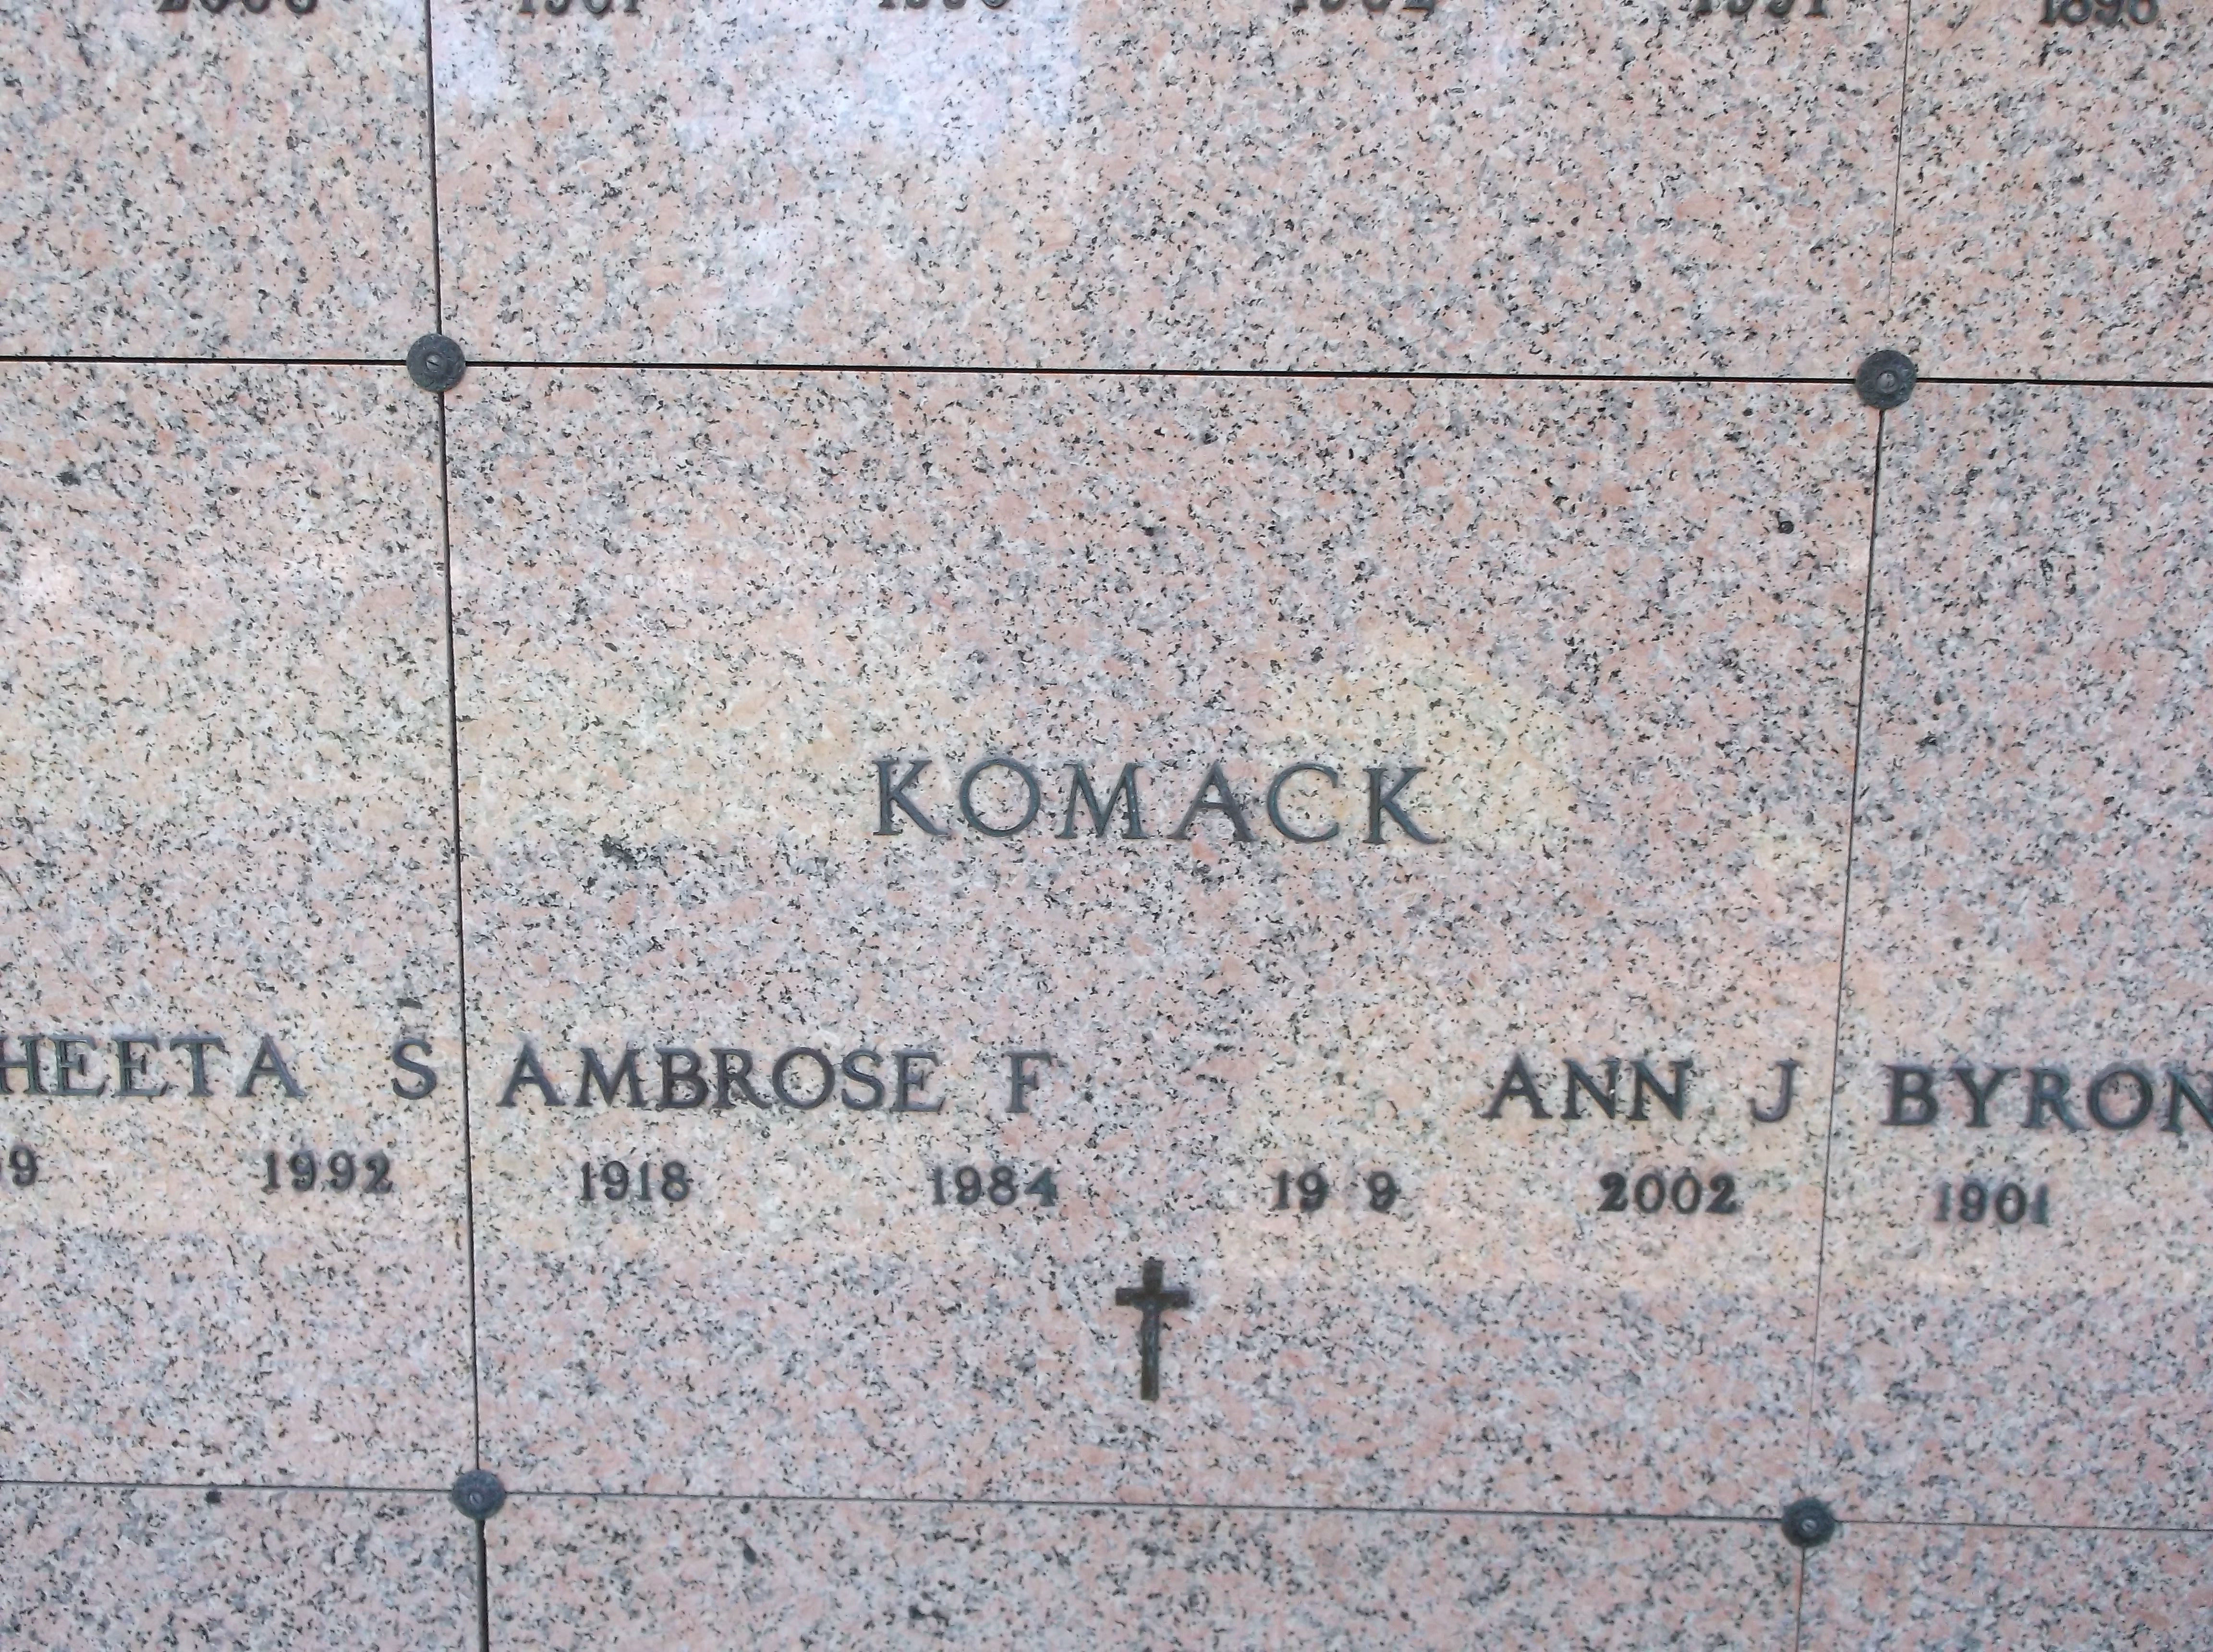 Ambrose F Komack